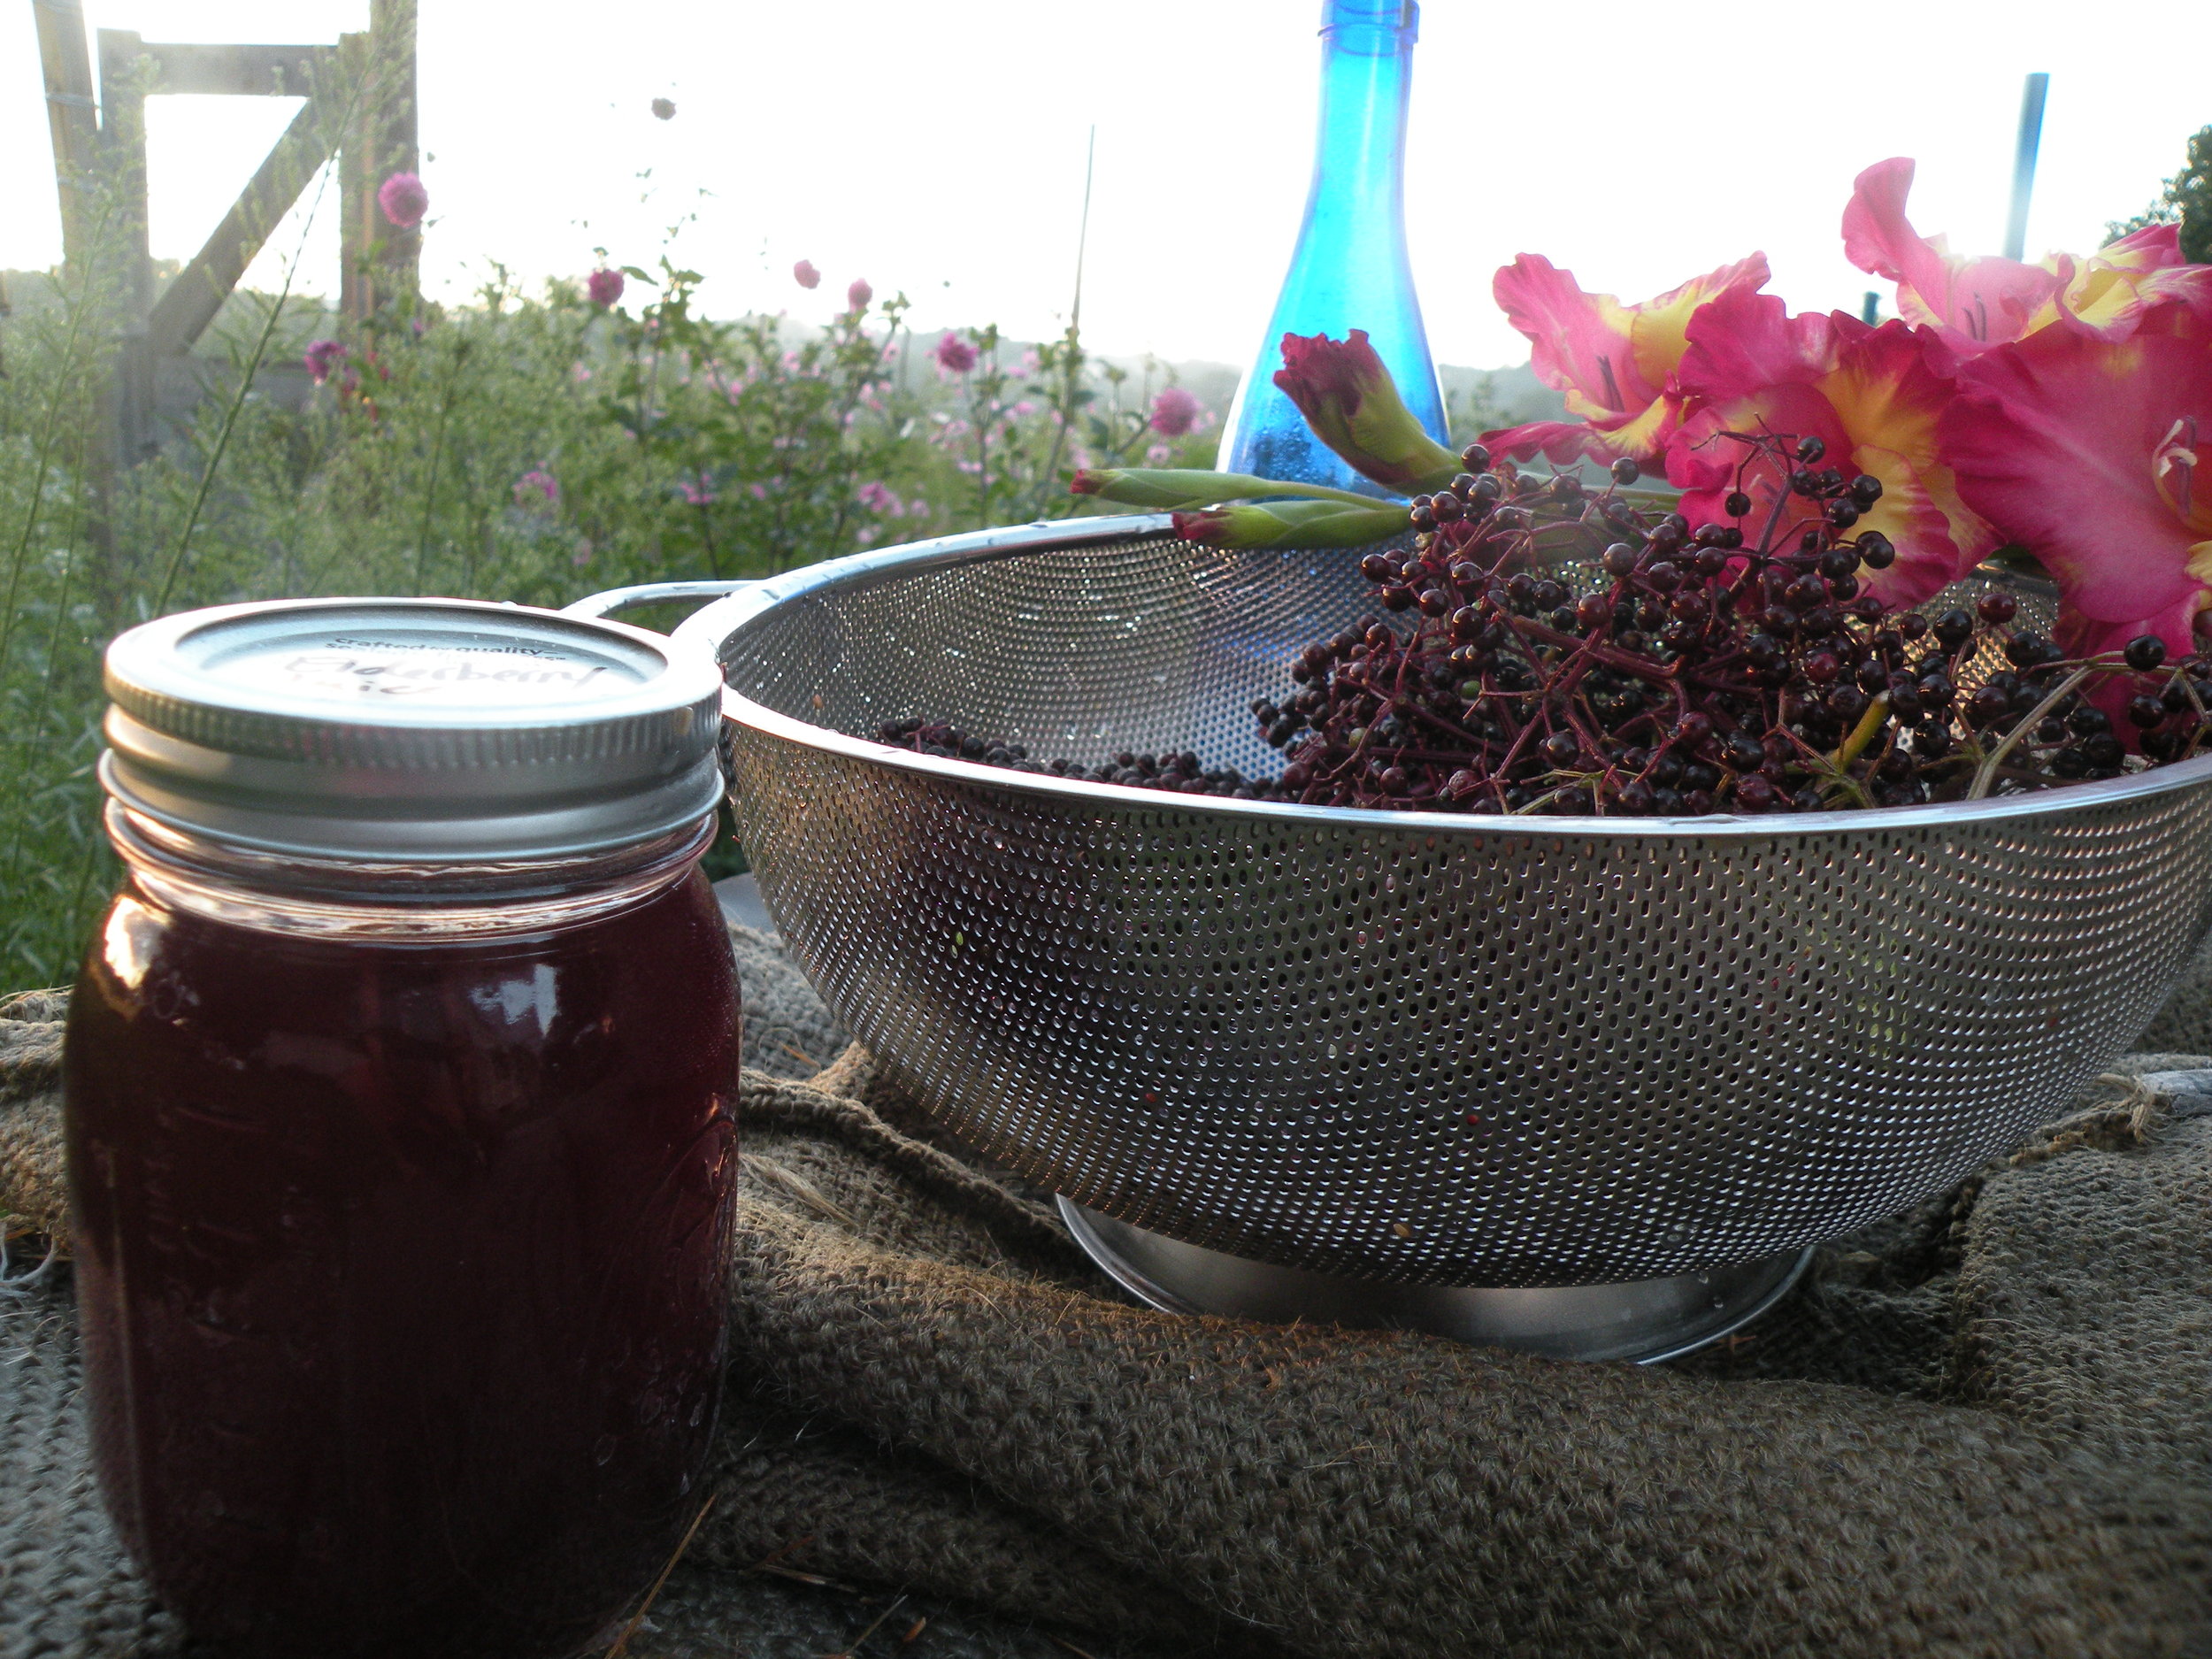 elderberry juice and berries - close up.jpg